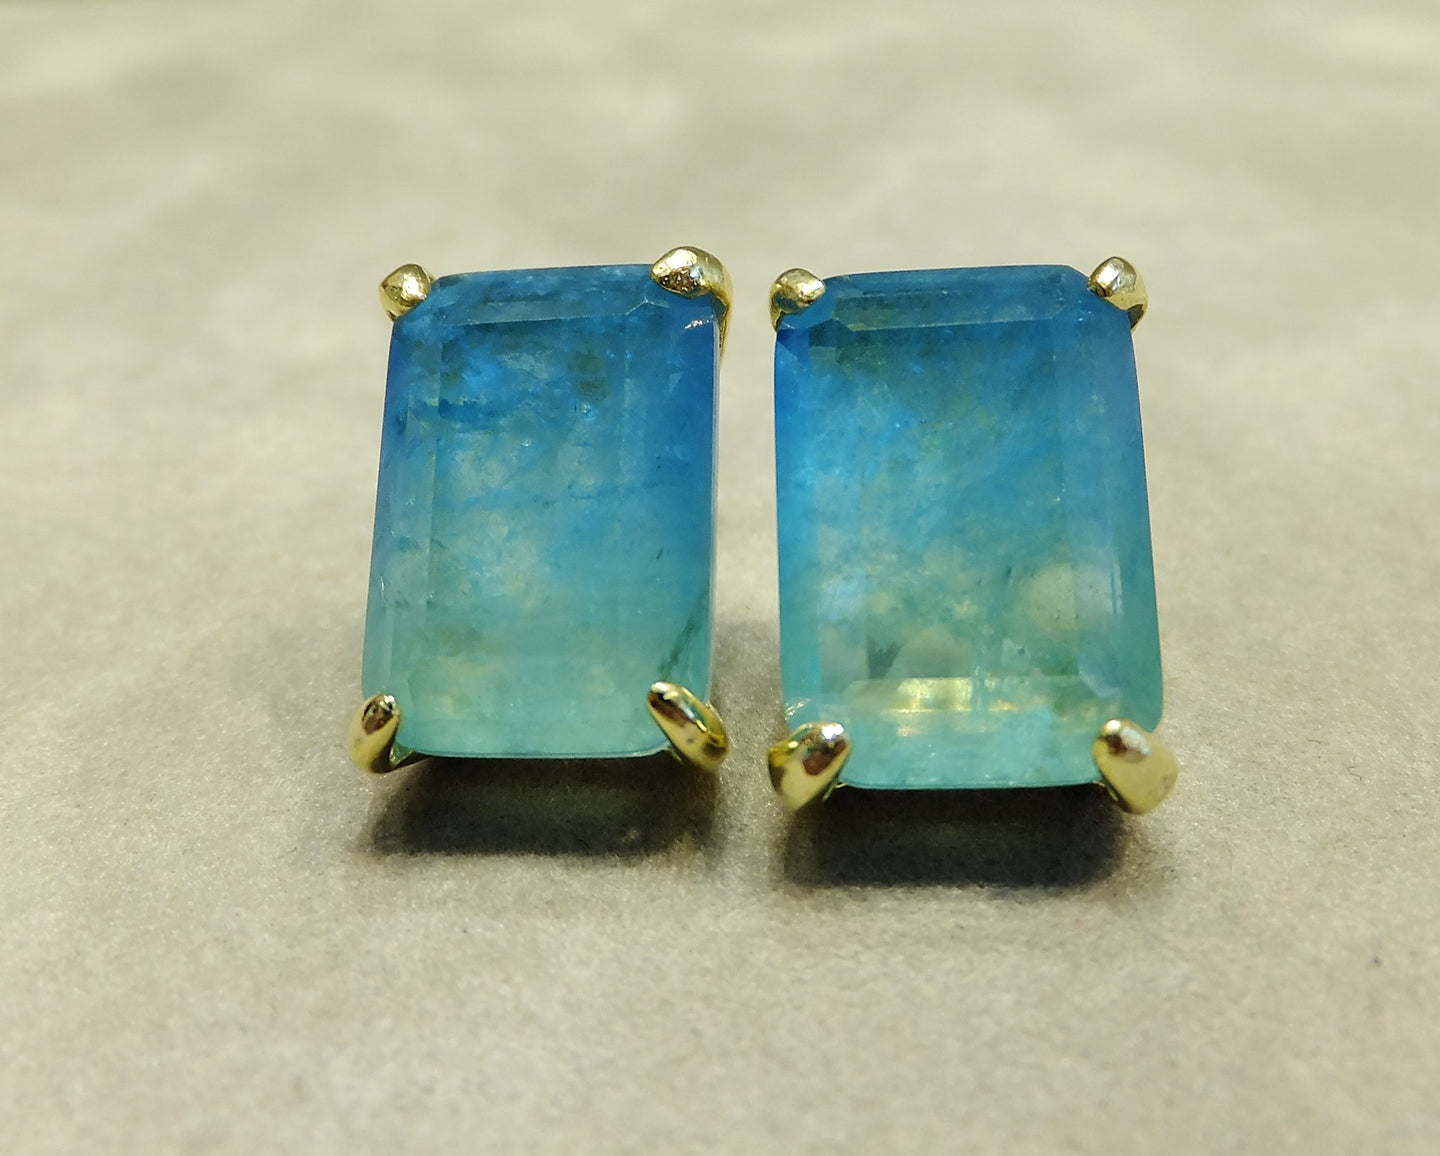 Blue toumaline earrings